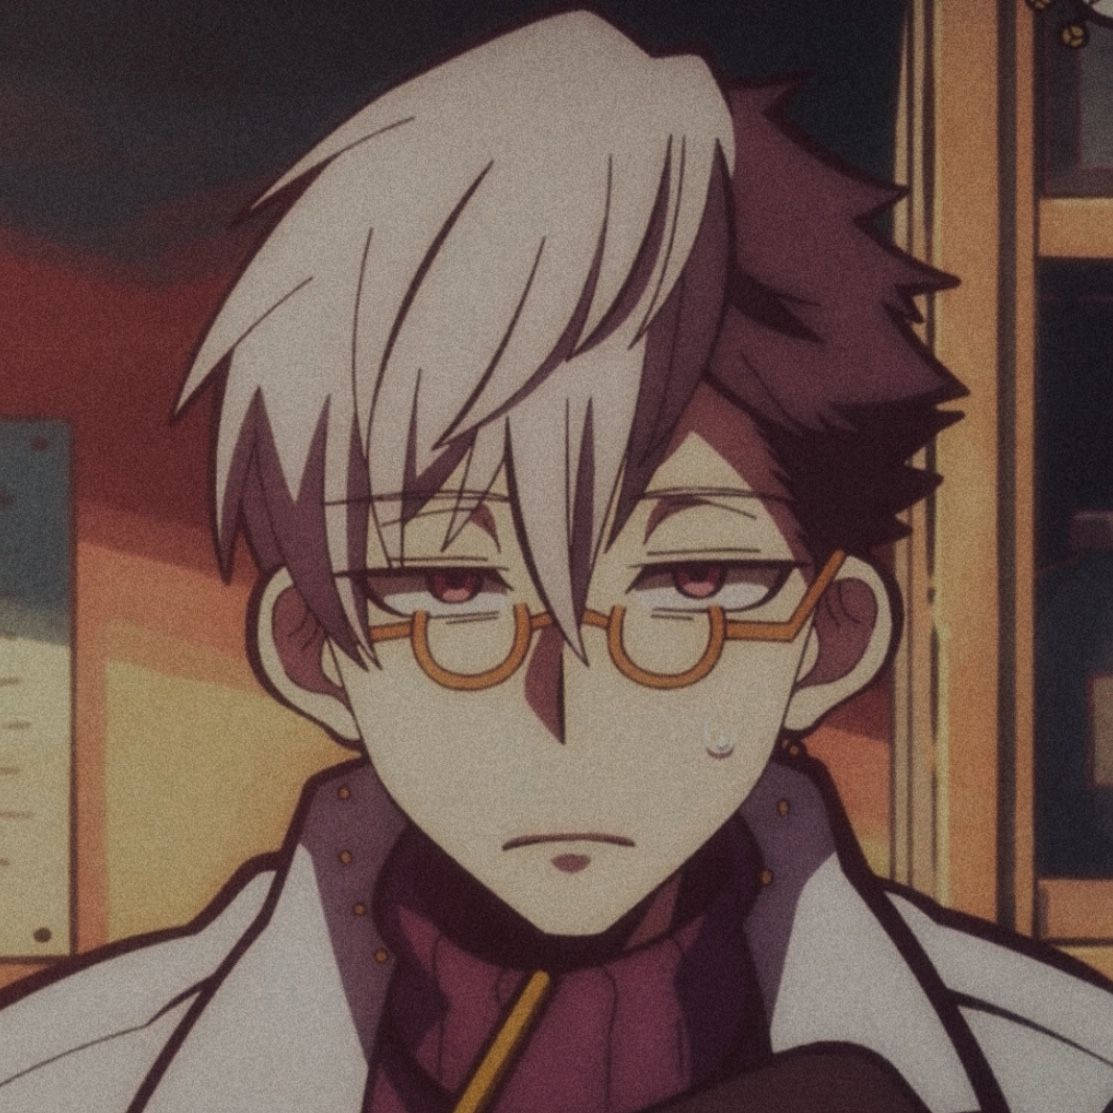 Aesthetic Anime Boy Icon Bored Expression Background